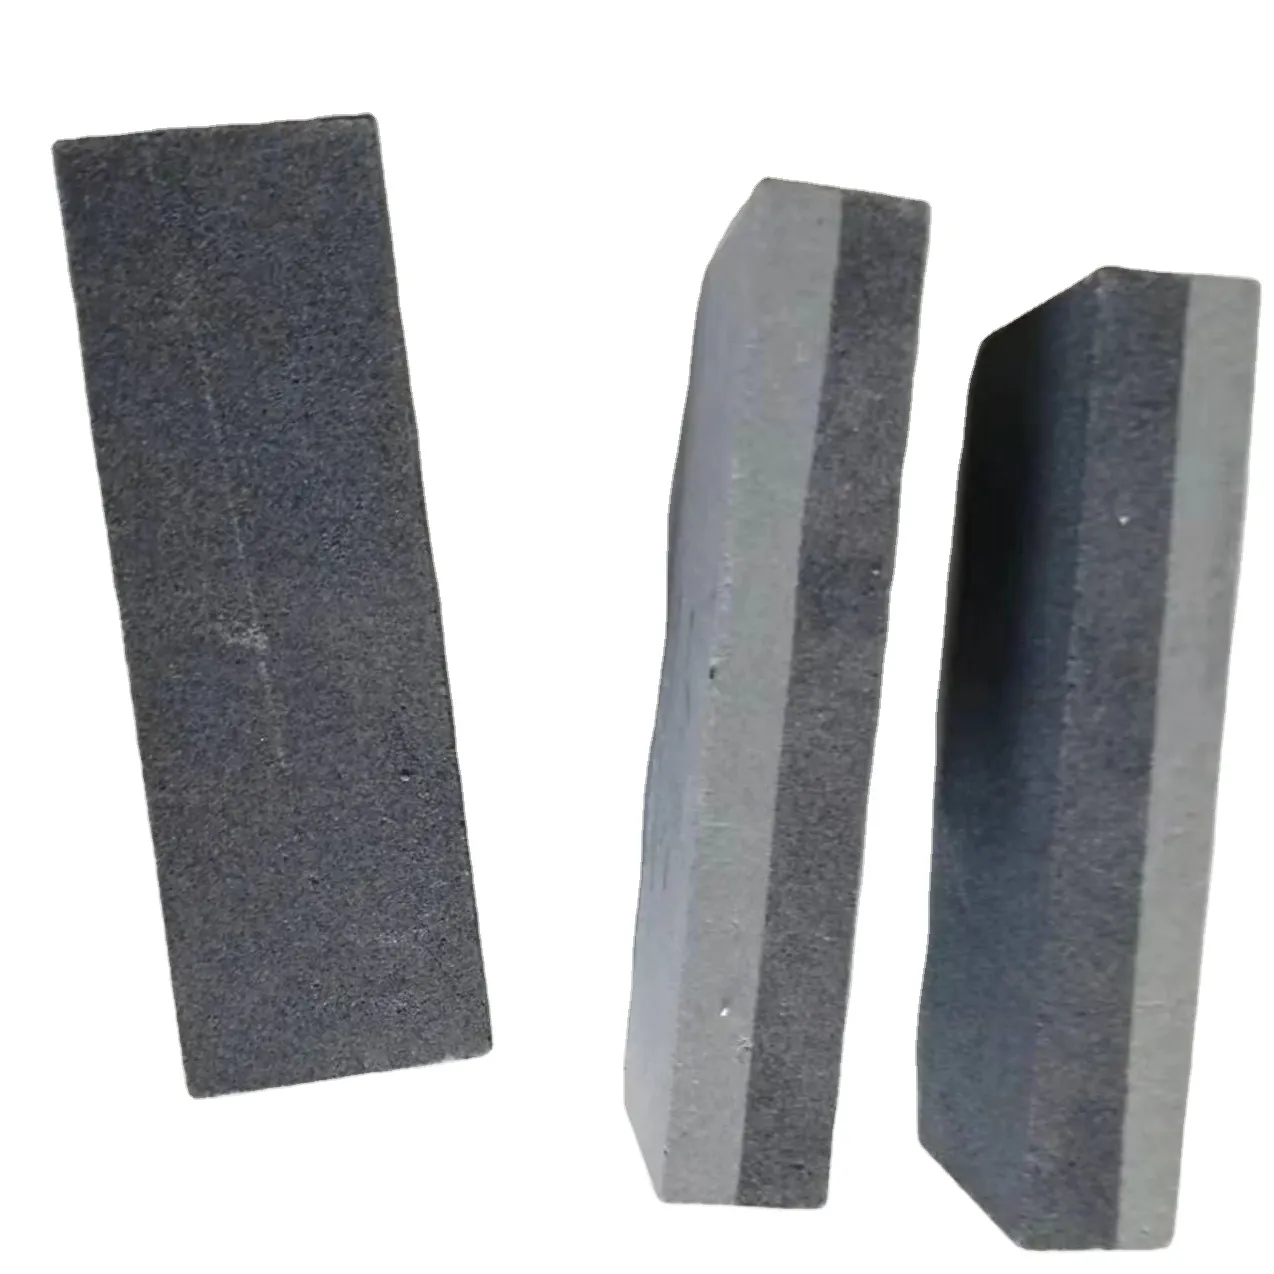 Afilador de óxido de aluminio, piedra Para afilar cuchillos, 150x30x25mm, proveedor de China